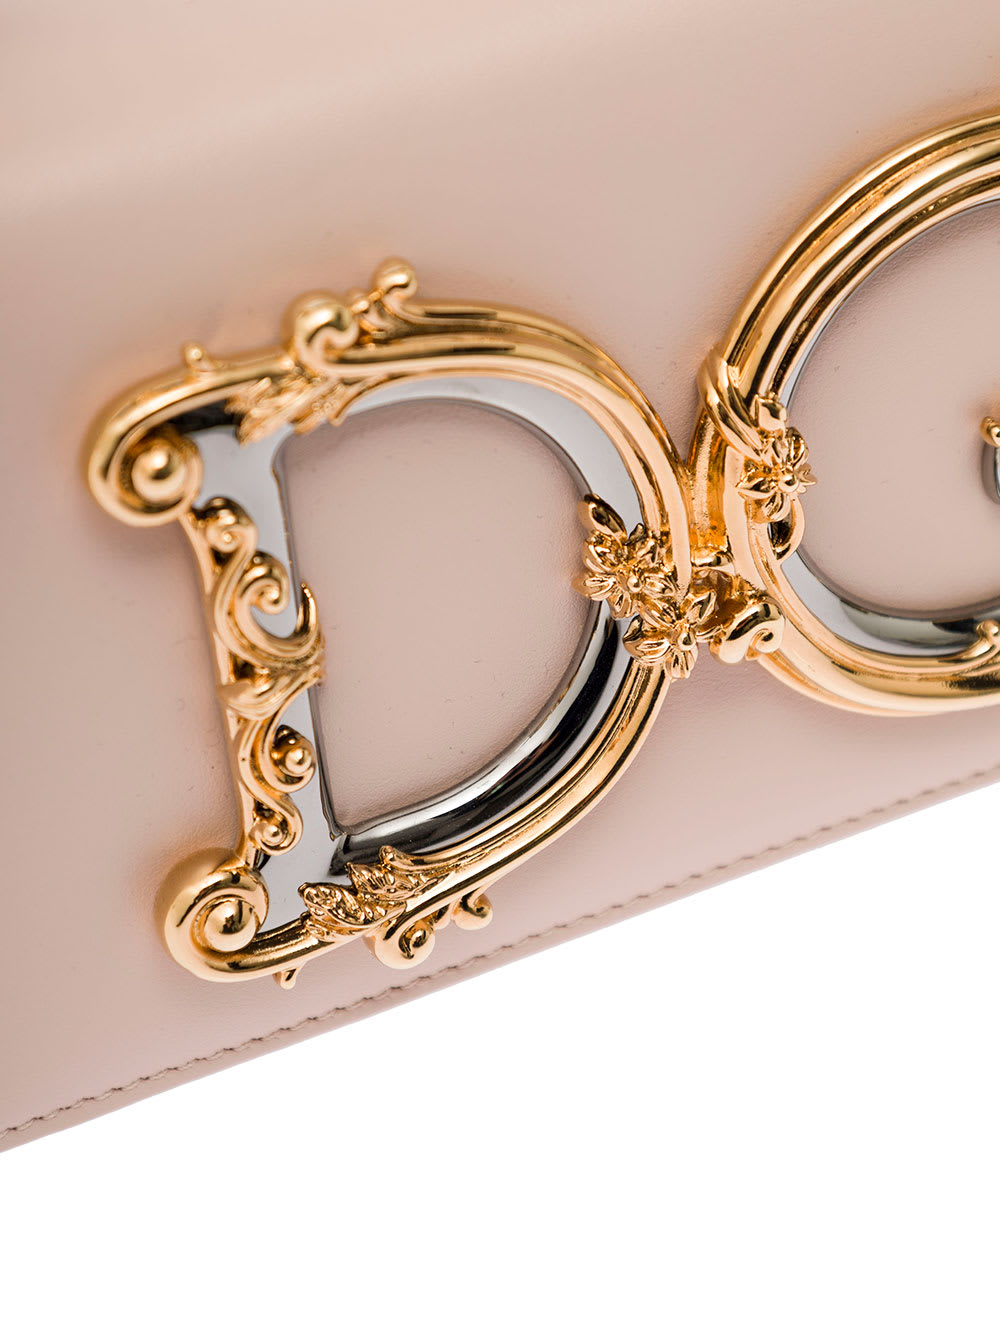 Shop Dolce & Gabbana Dg Girl Pink Leather Crossbody Bag